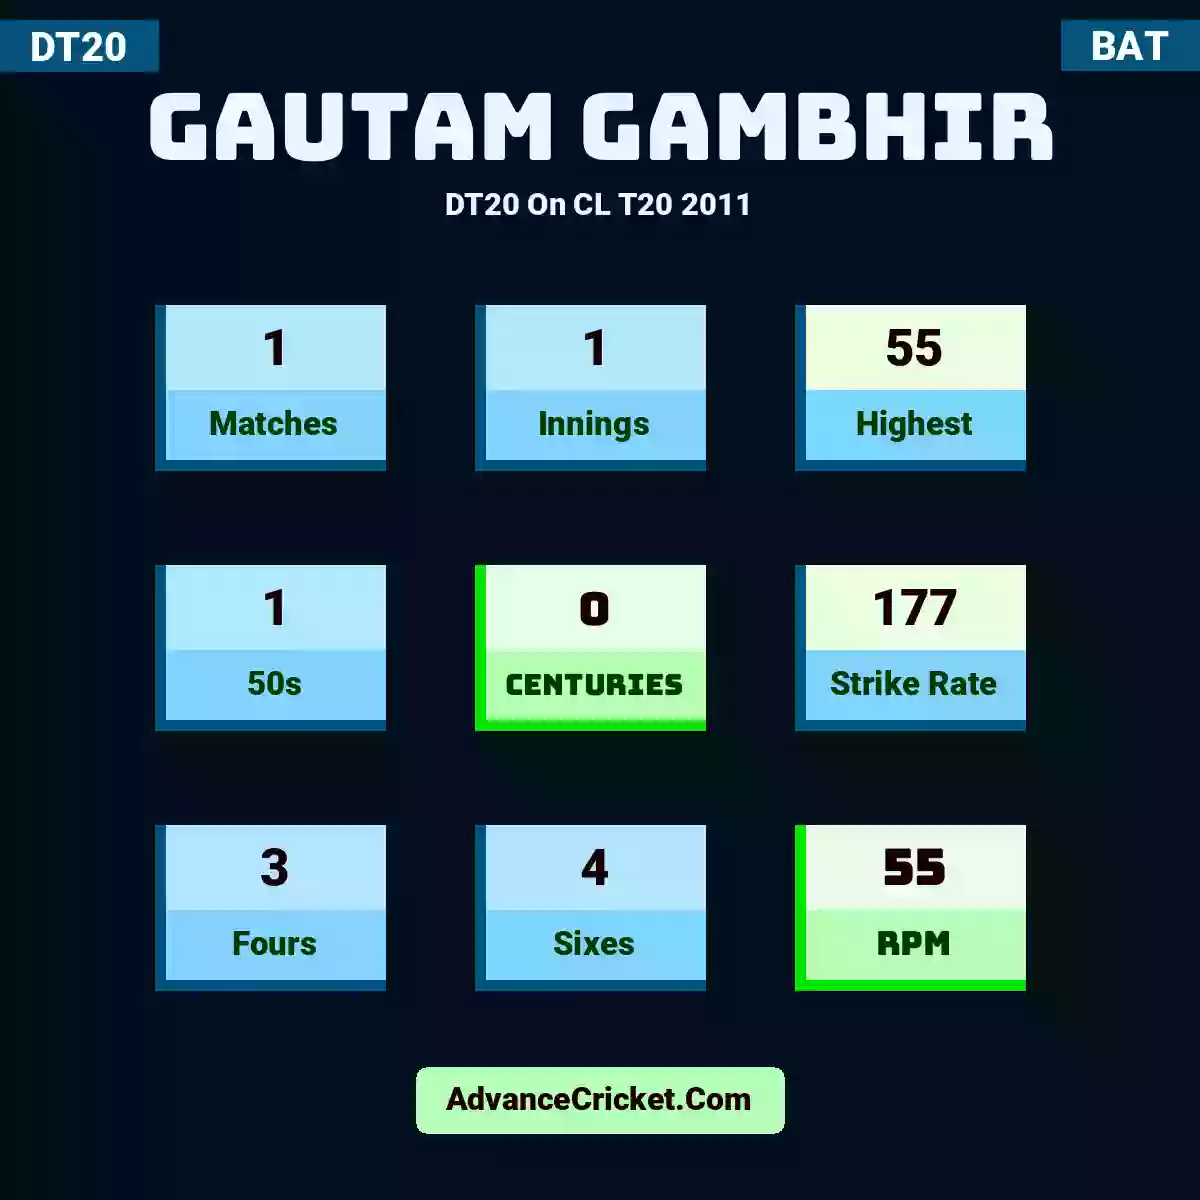 Gautam Gambhir DT20  On CL T20 2011, Gautam Gambhir played 1 matches, scored 55 runs as highest, 1 half-centuries, and 0 centuries, with a strike rate of 177. G.Gambhir hit 3 fours and 4 sixes, with an RPM of 55.